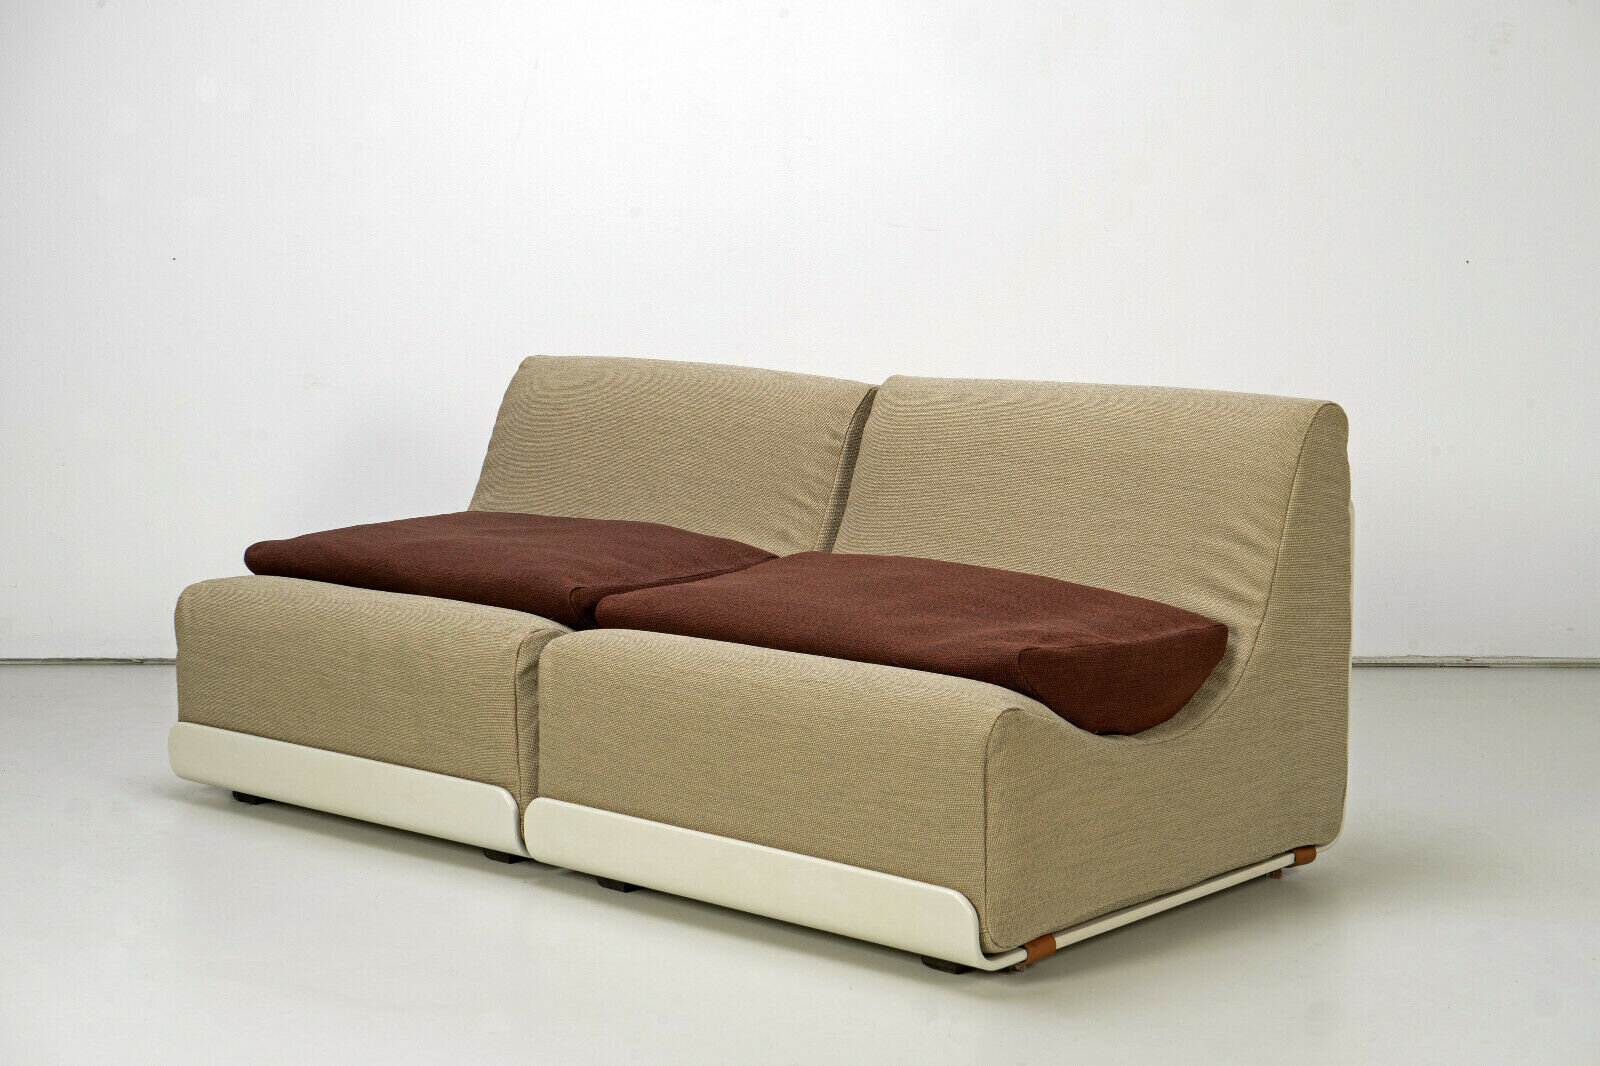 Orbis sofa by Luigi Colani £982.20